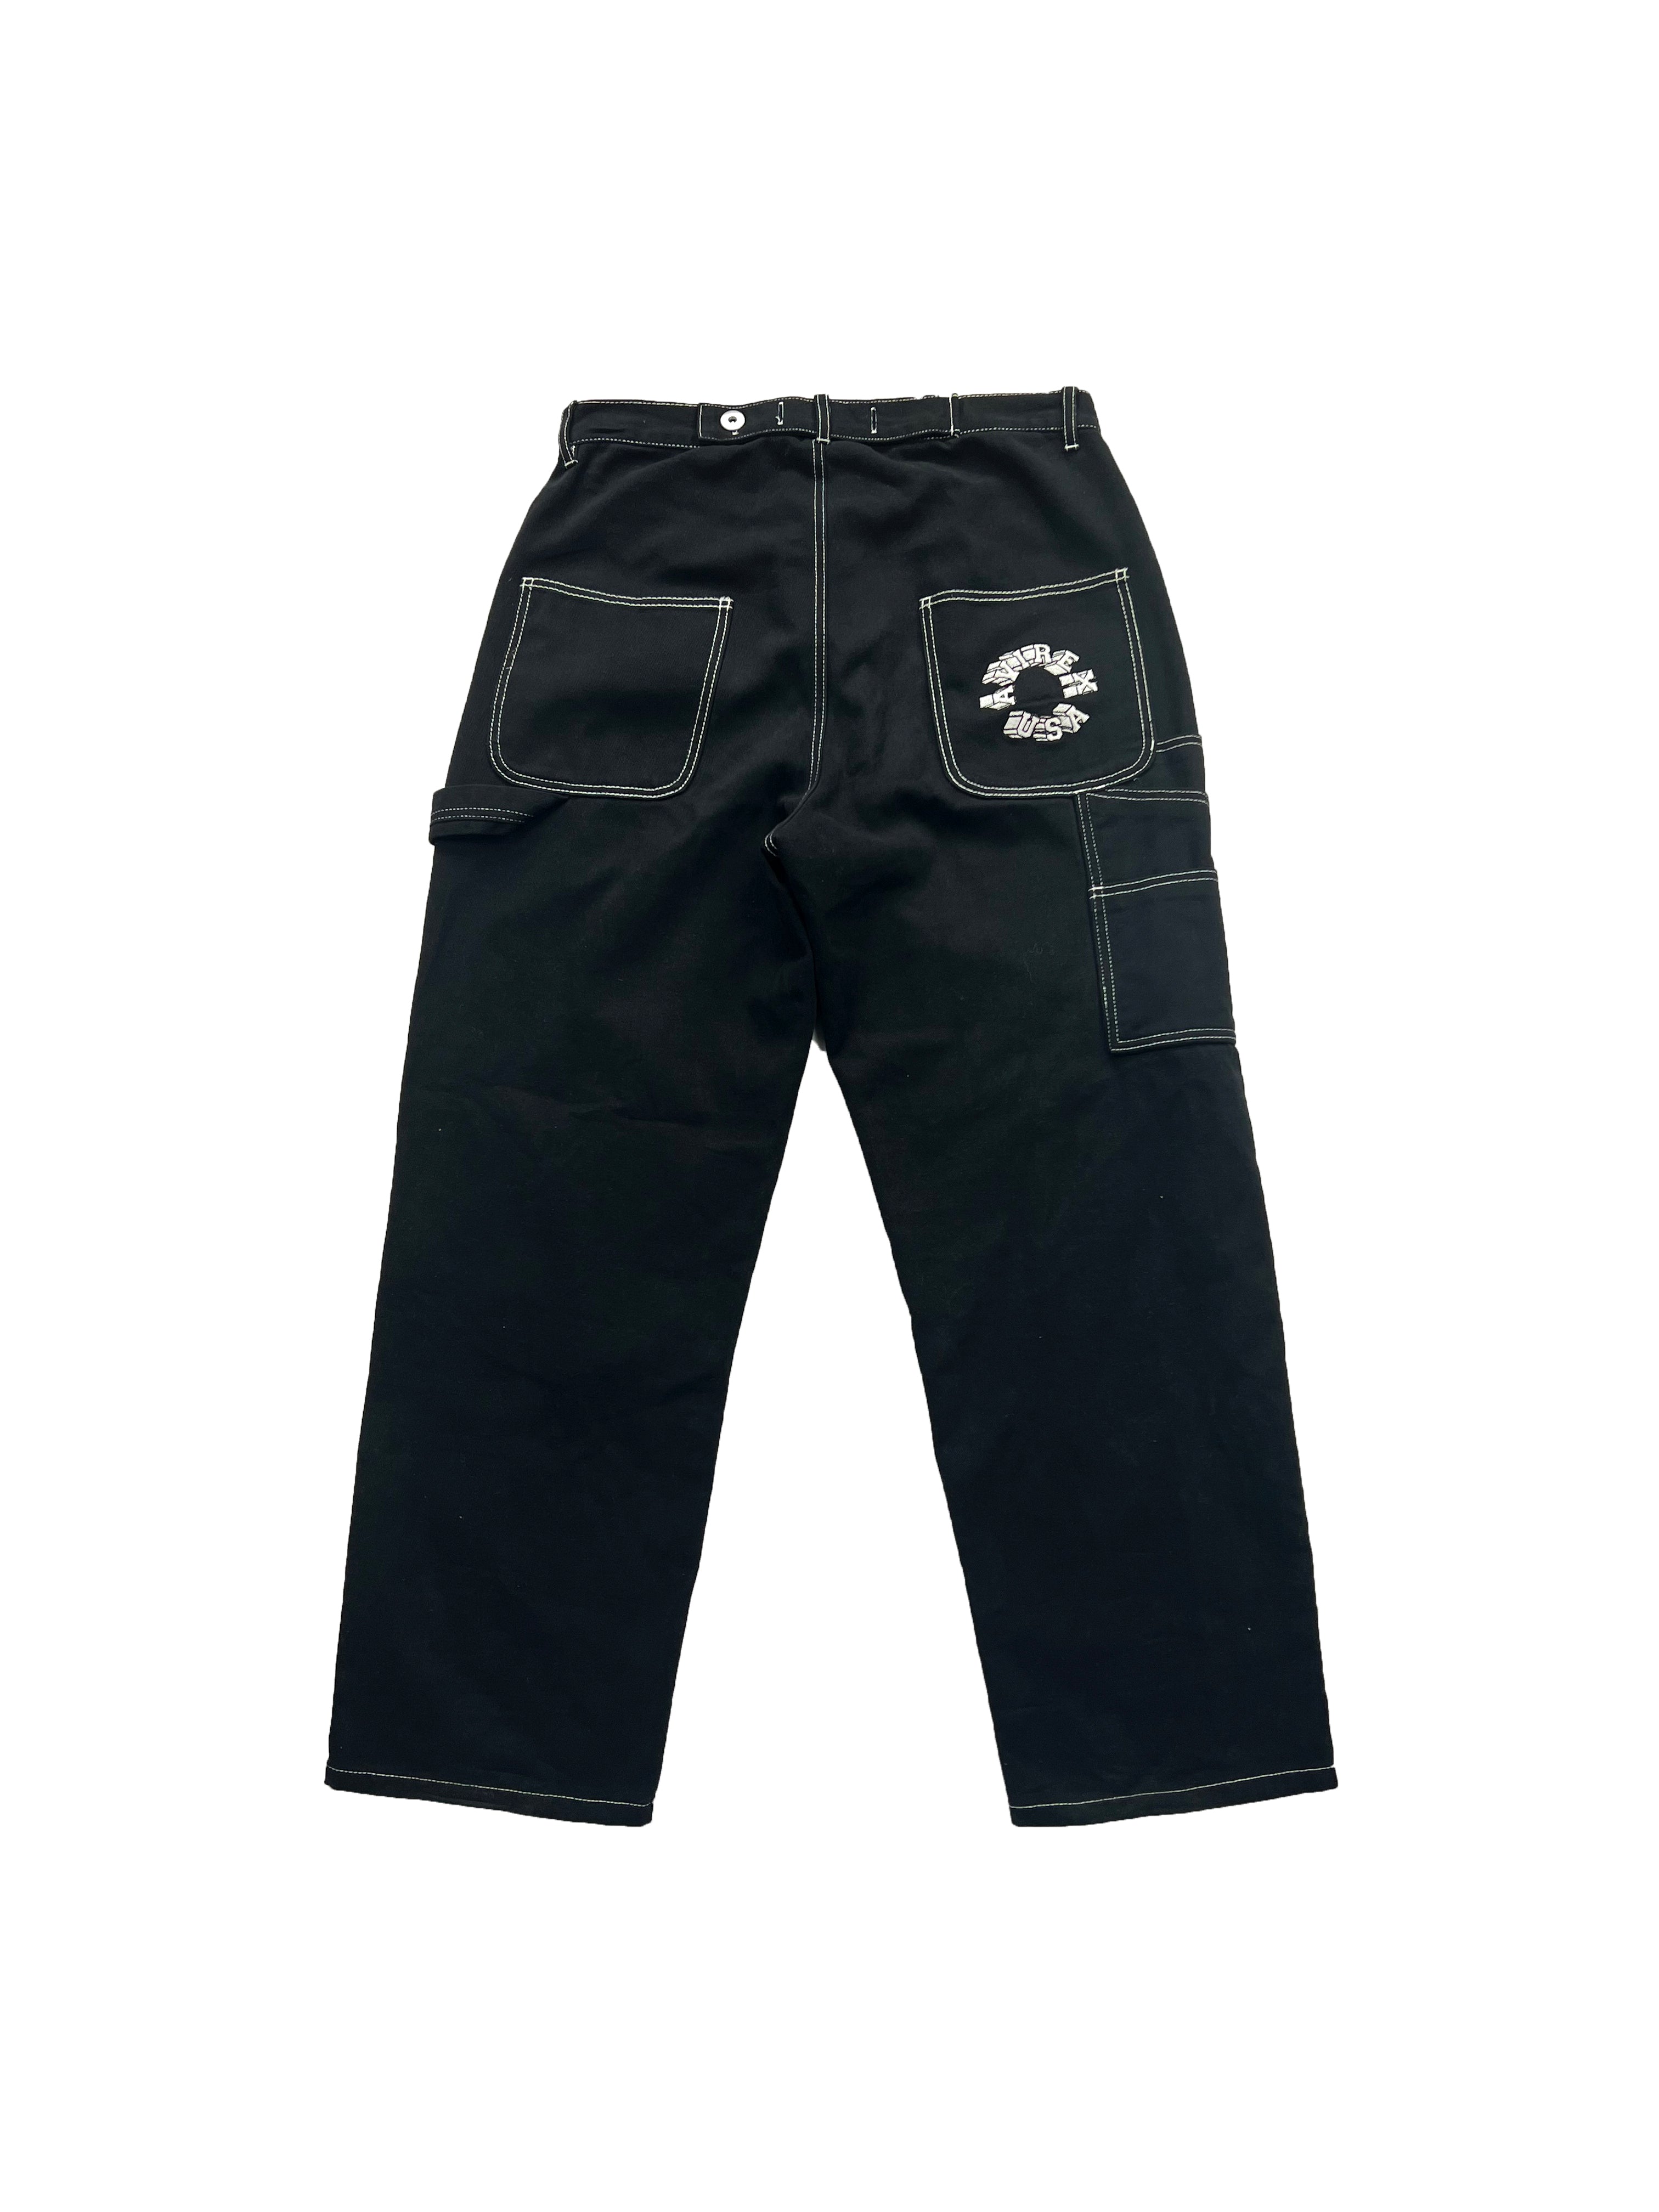 Avirex Black Mole Skin Carpenter Jeans 00's